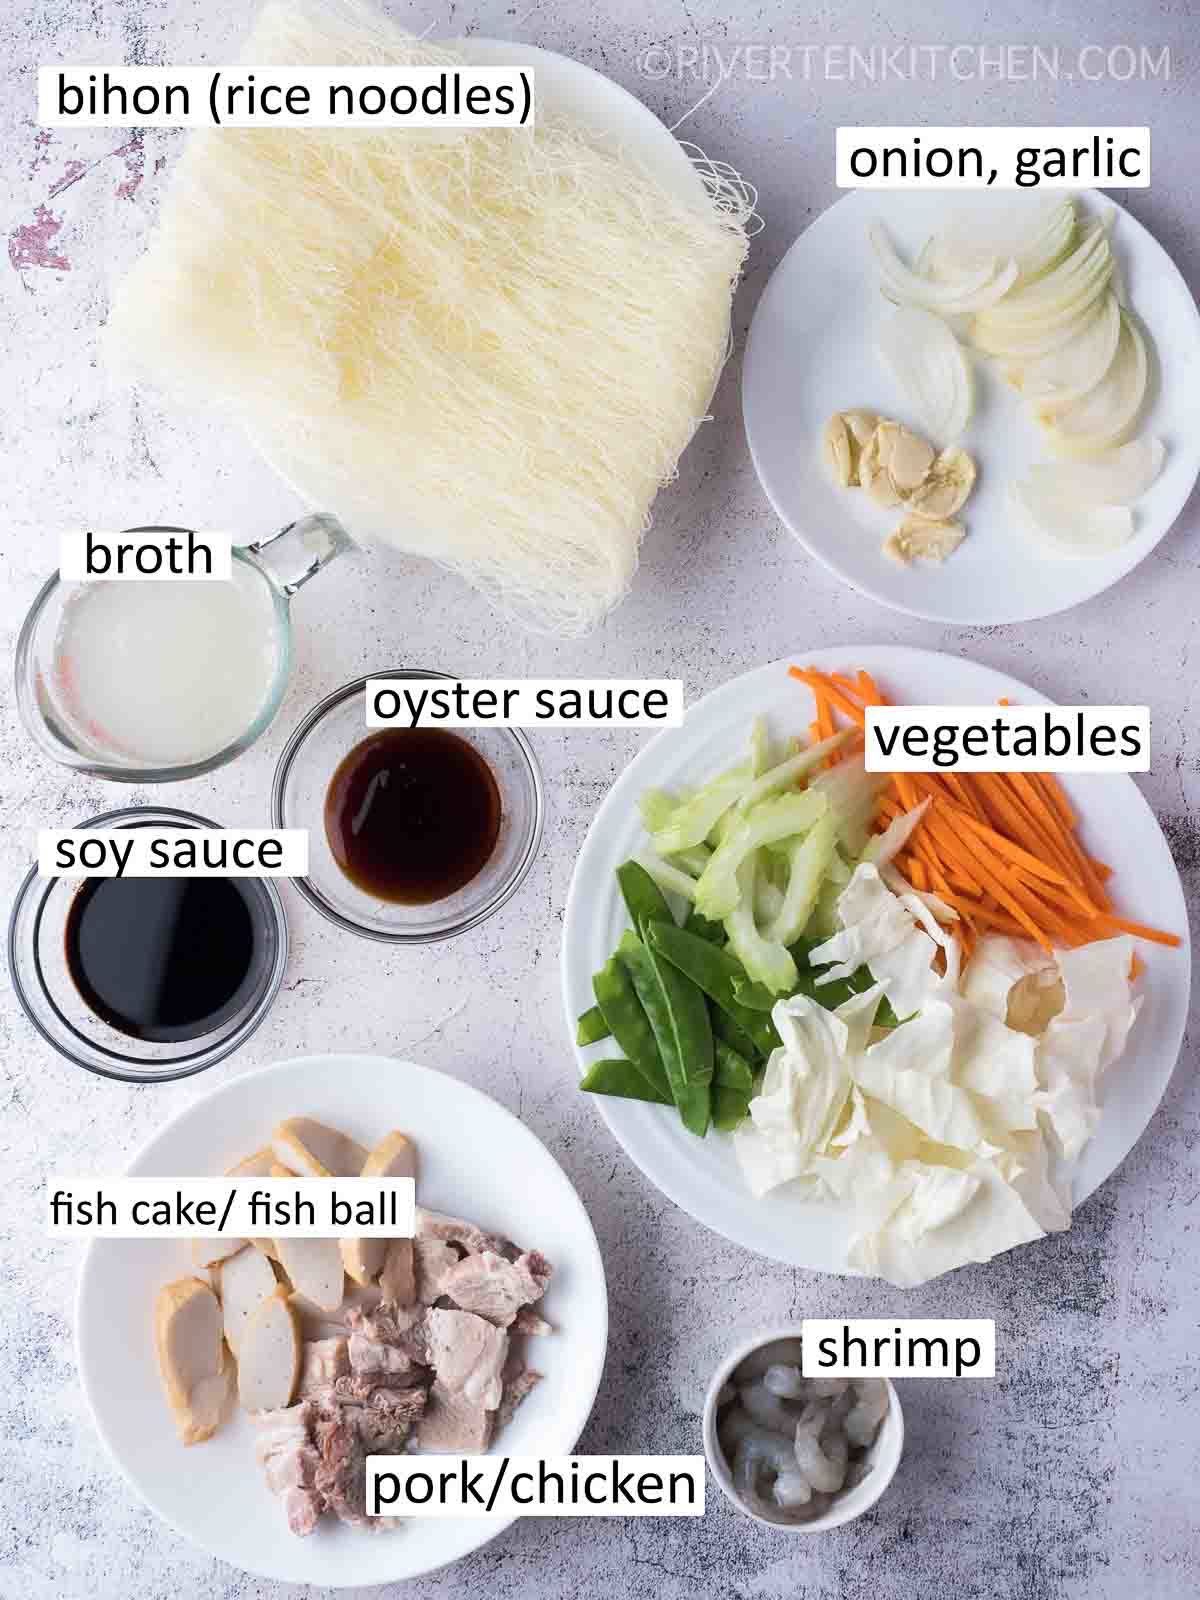 pancit ingredients - rice noodles, sauce, vegetables, pork and shrimp